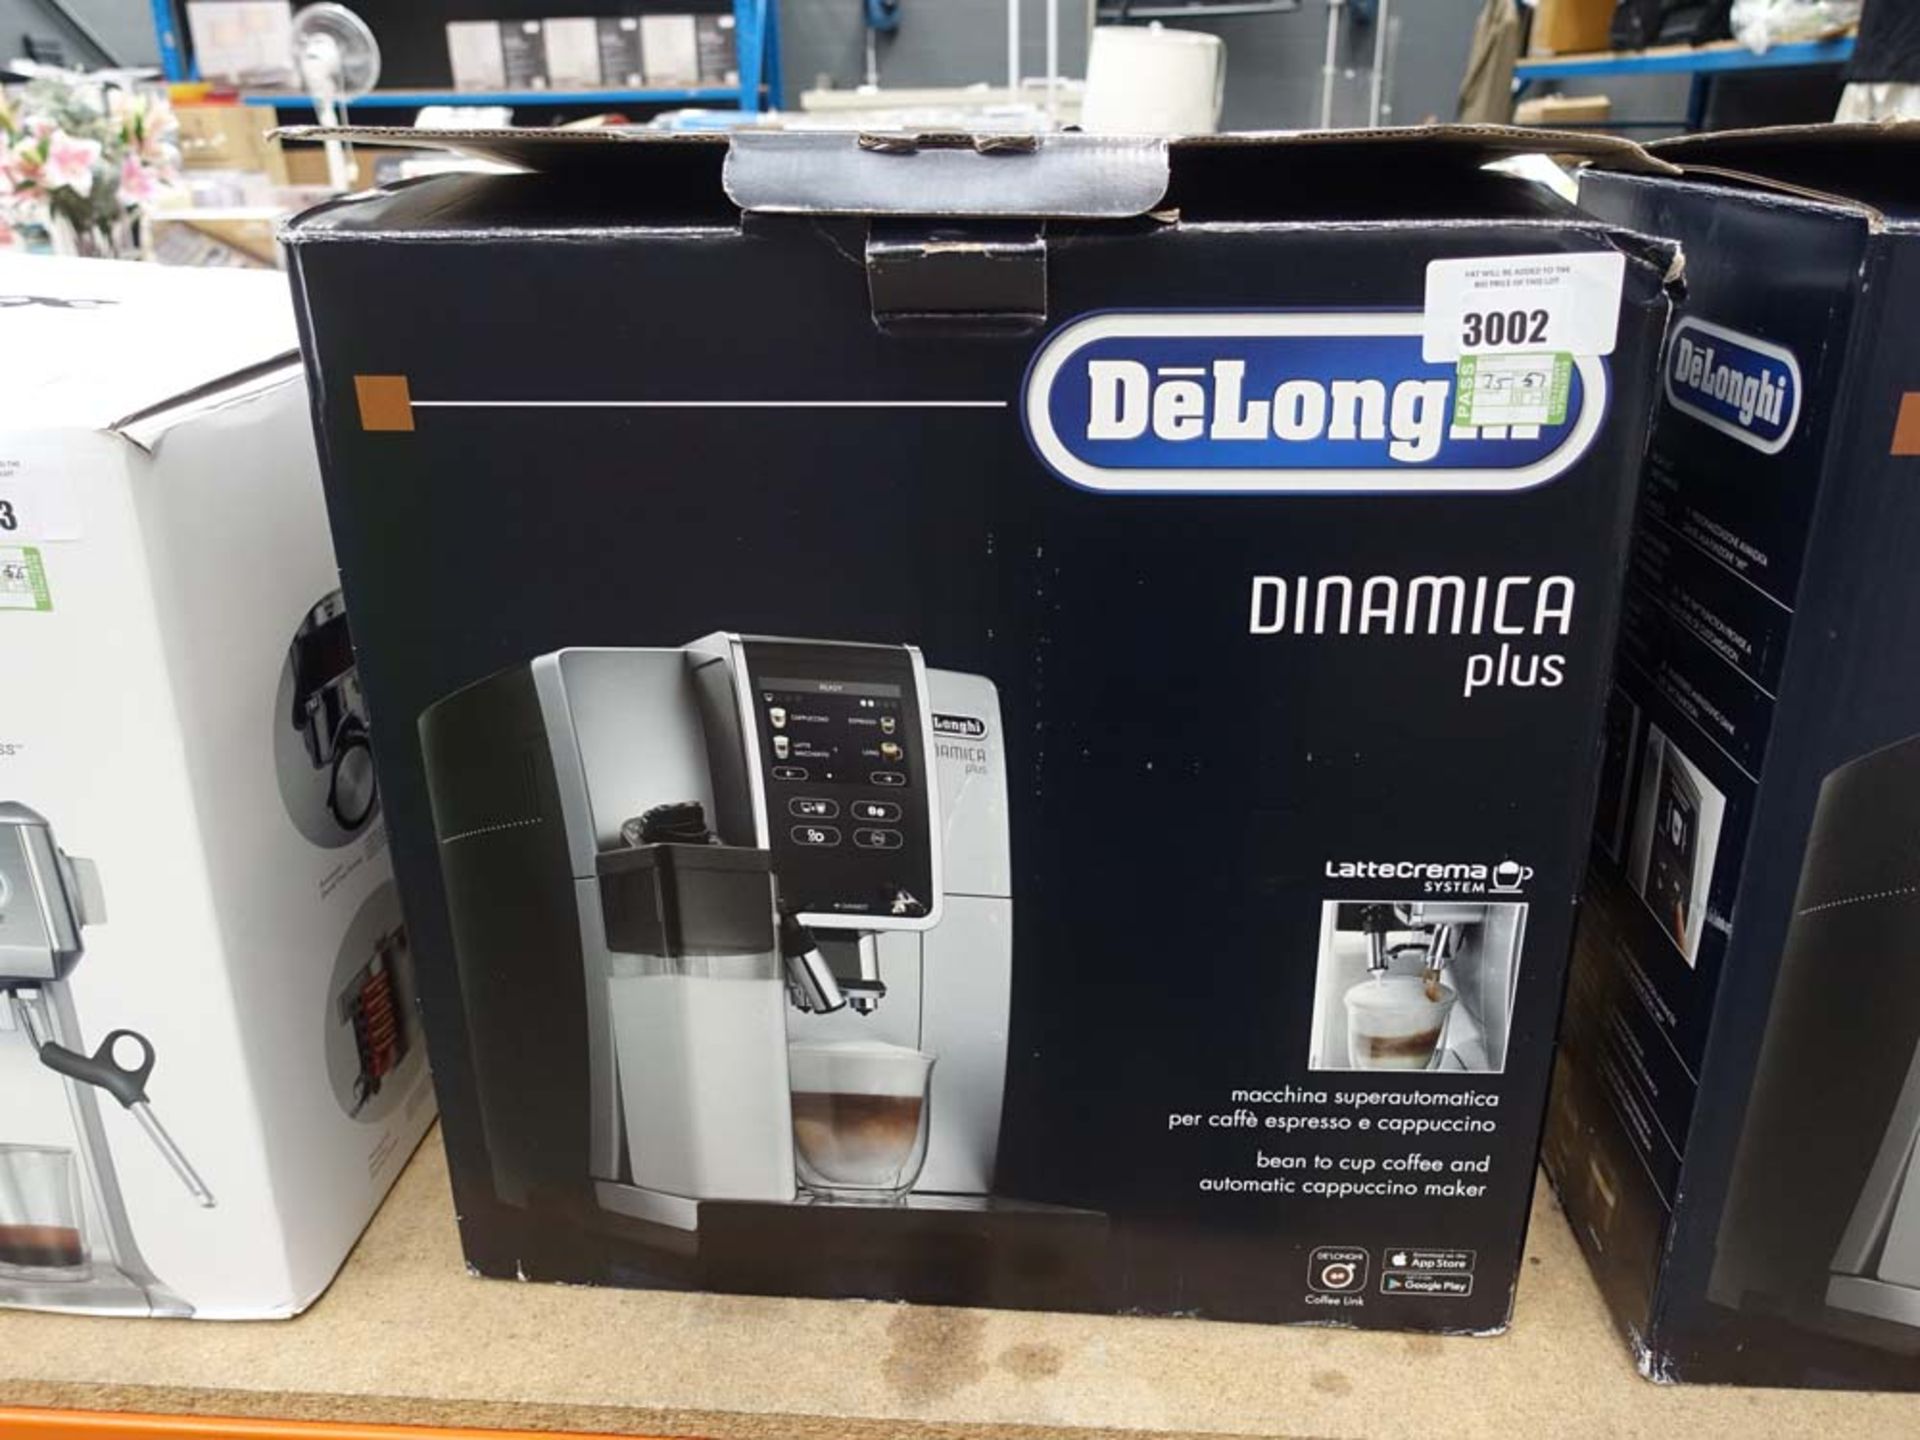 (57) Delonghi Dinamica Plus coffee machine